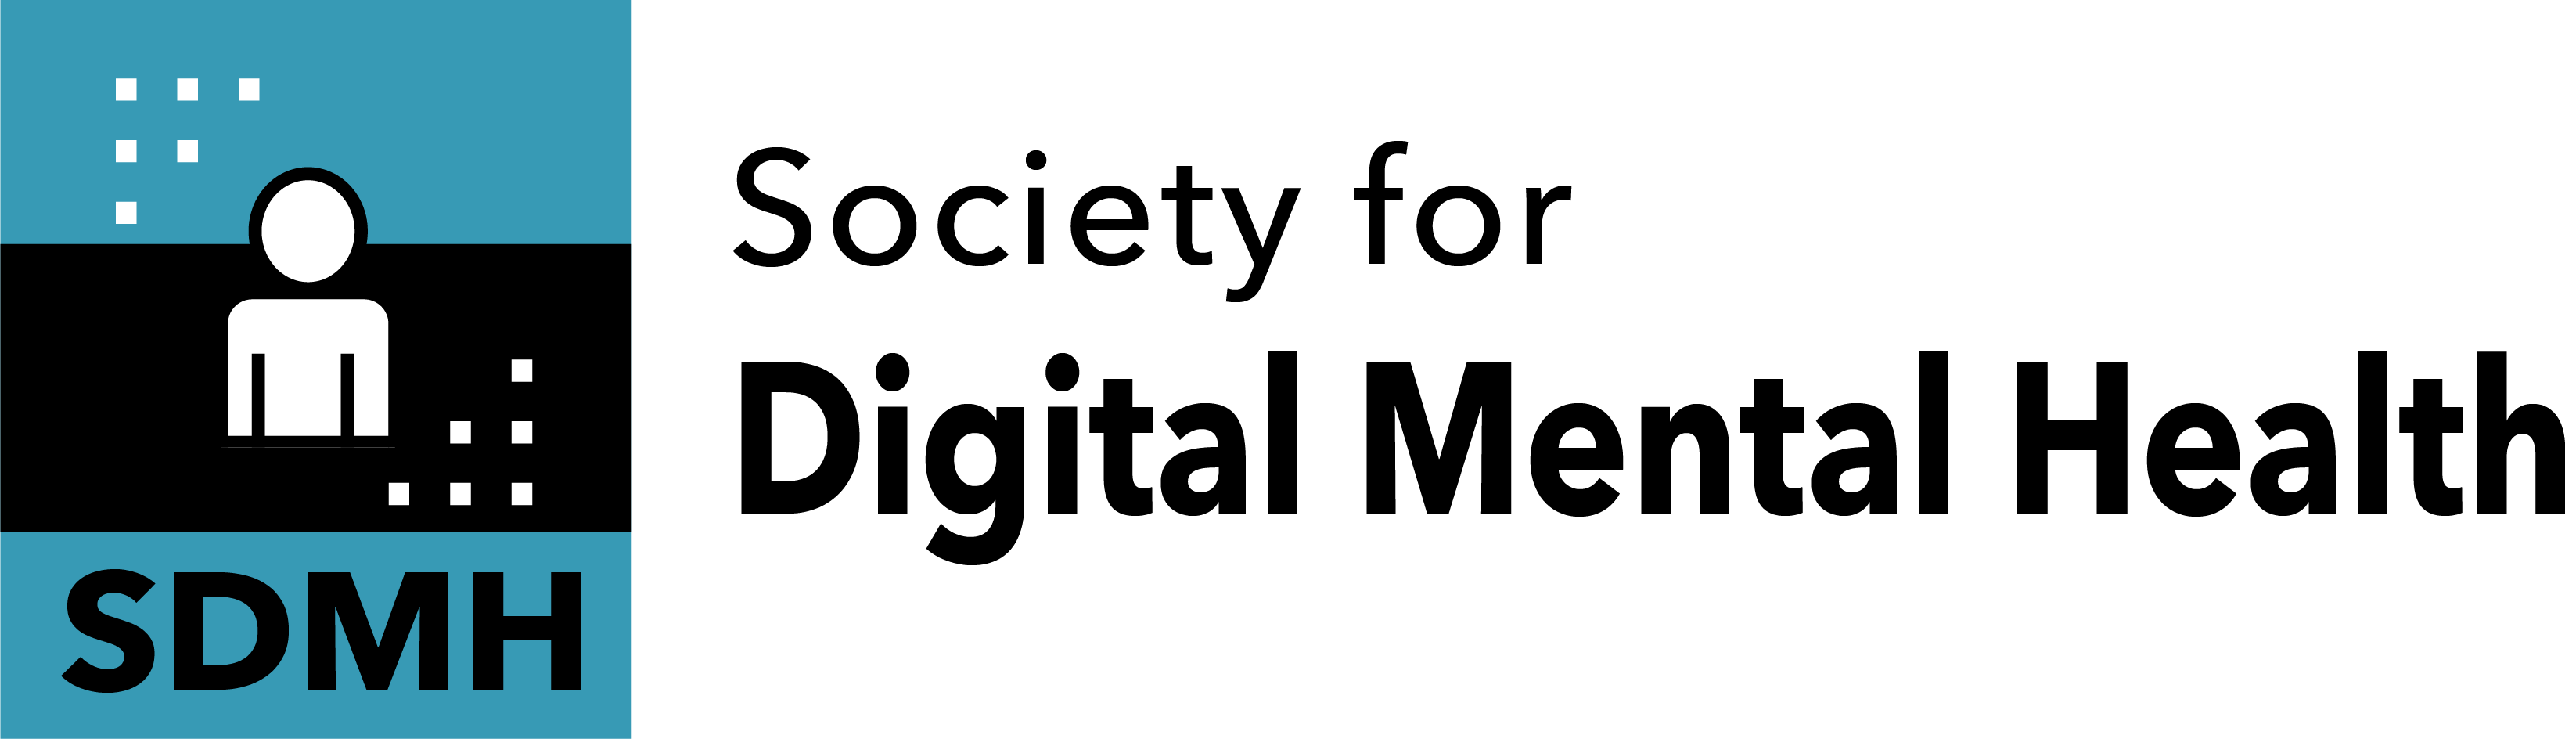 Society for Digital Mental Health